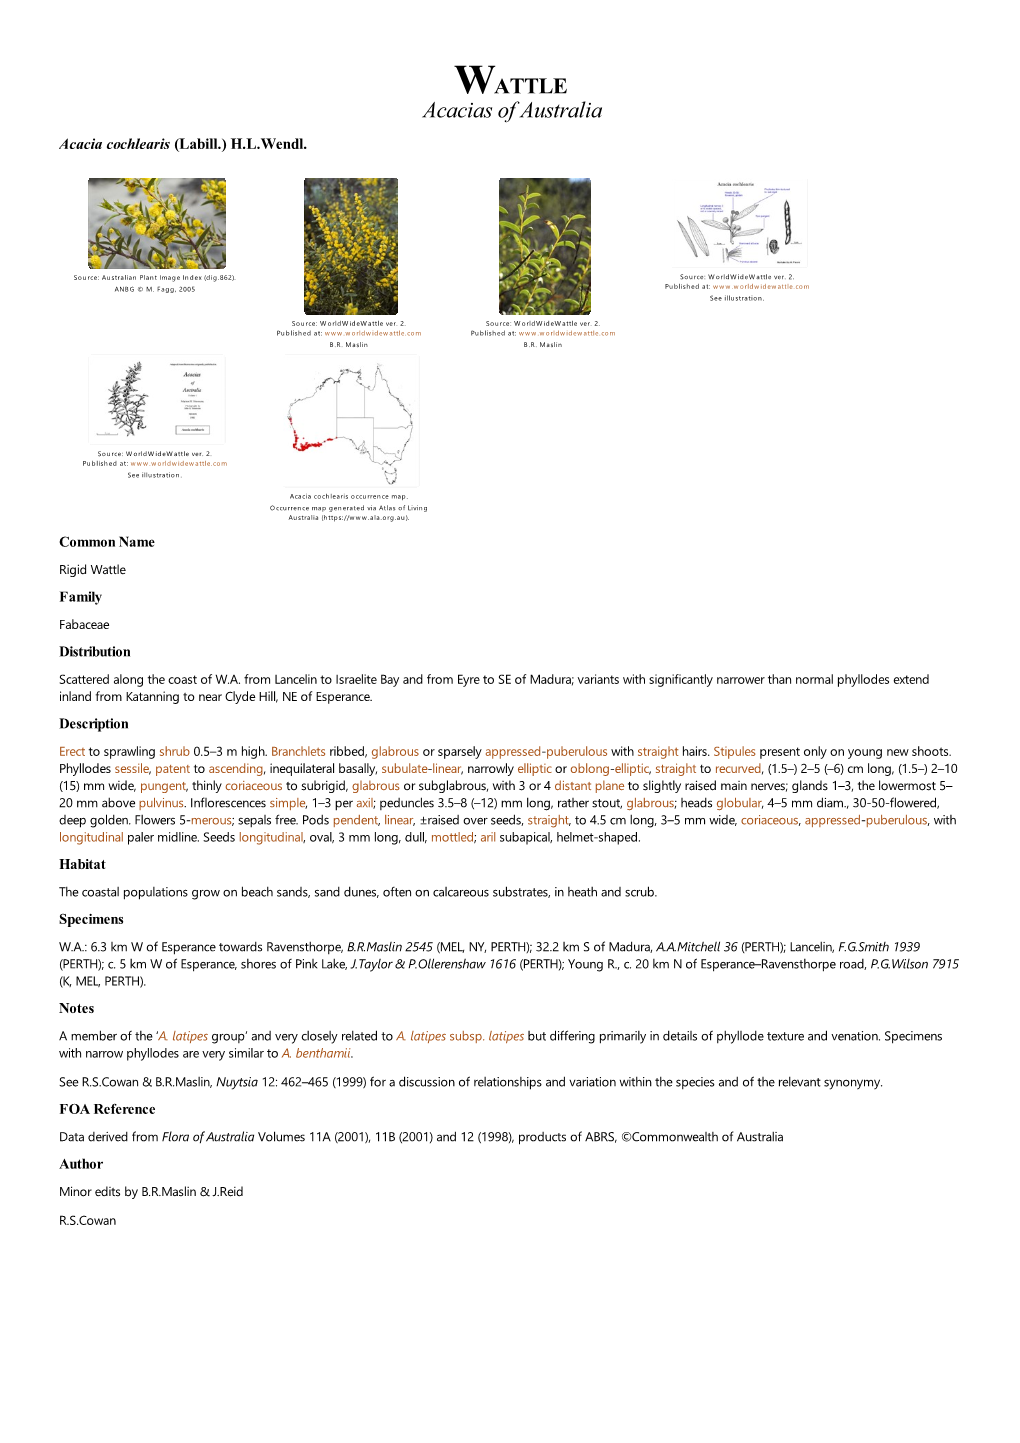 Acacia Cochlearis (Labill.) H.L.Wendl